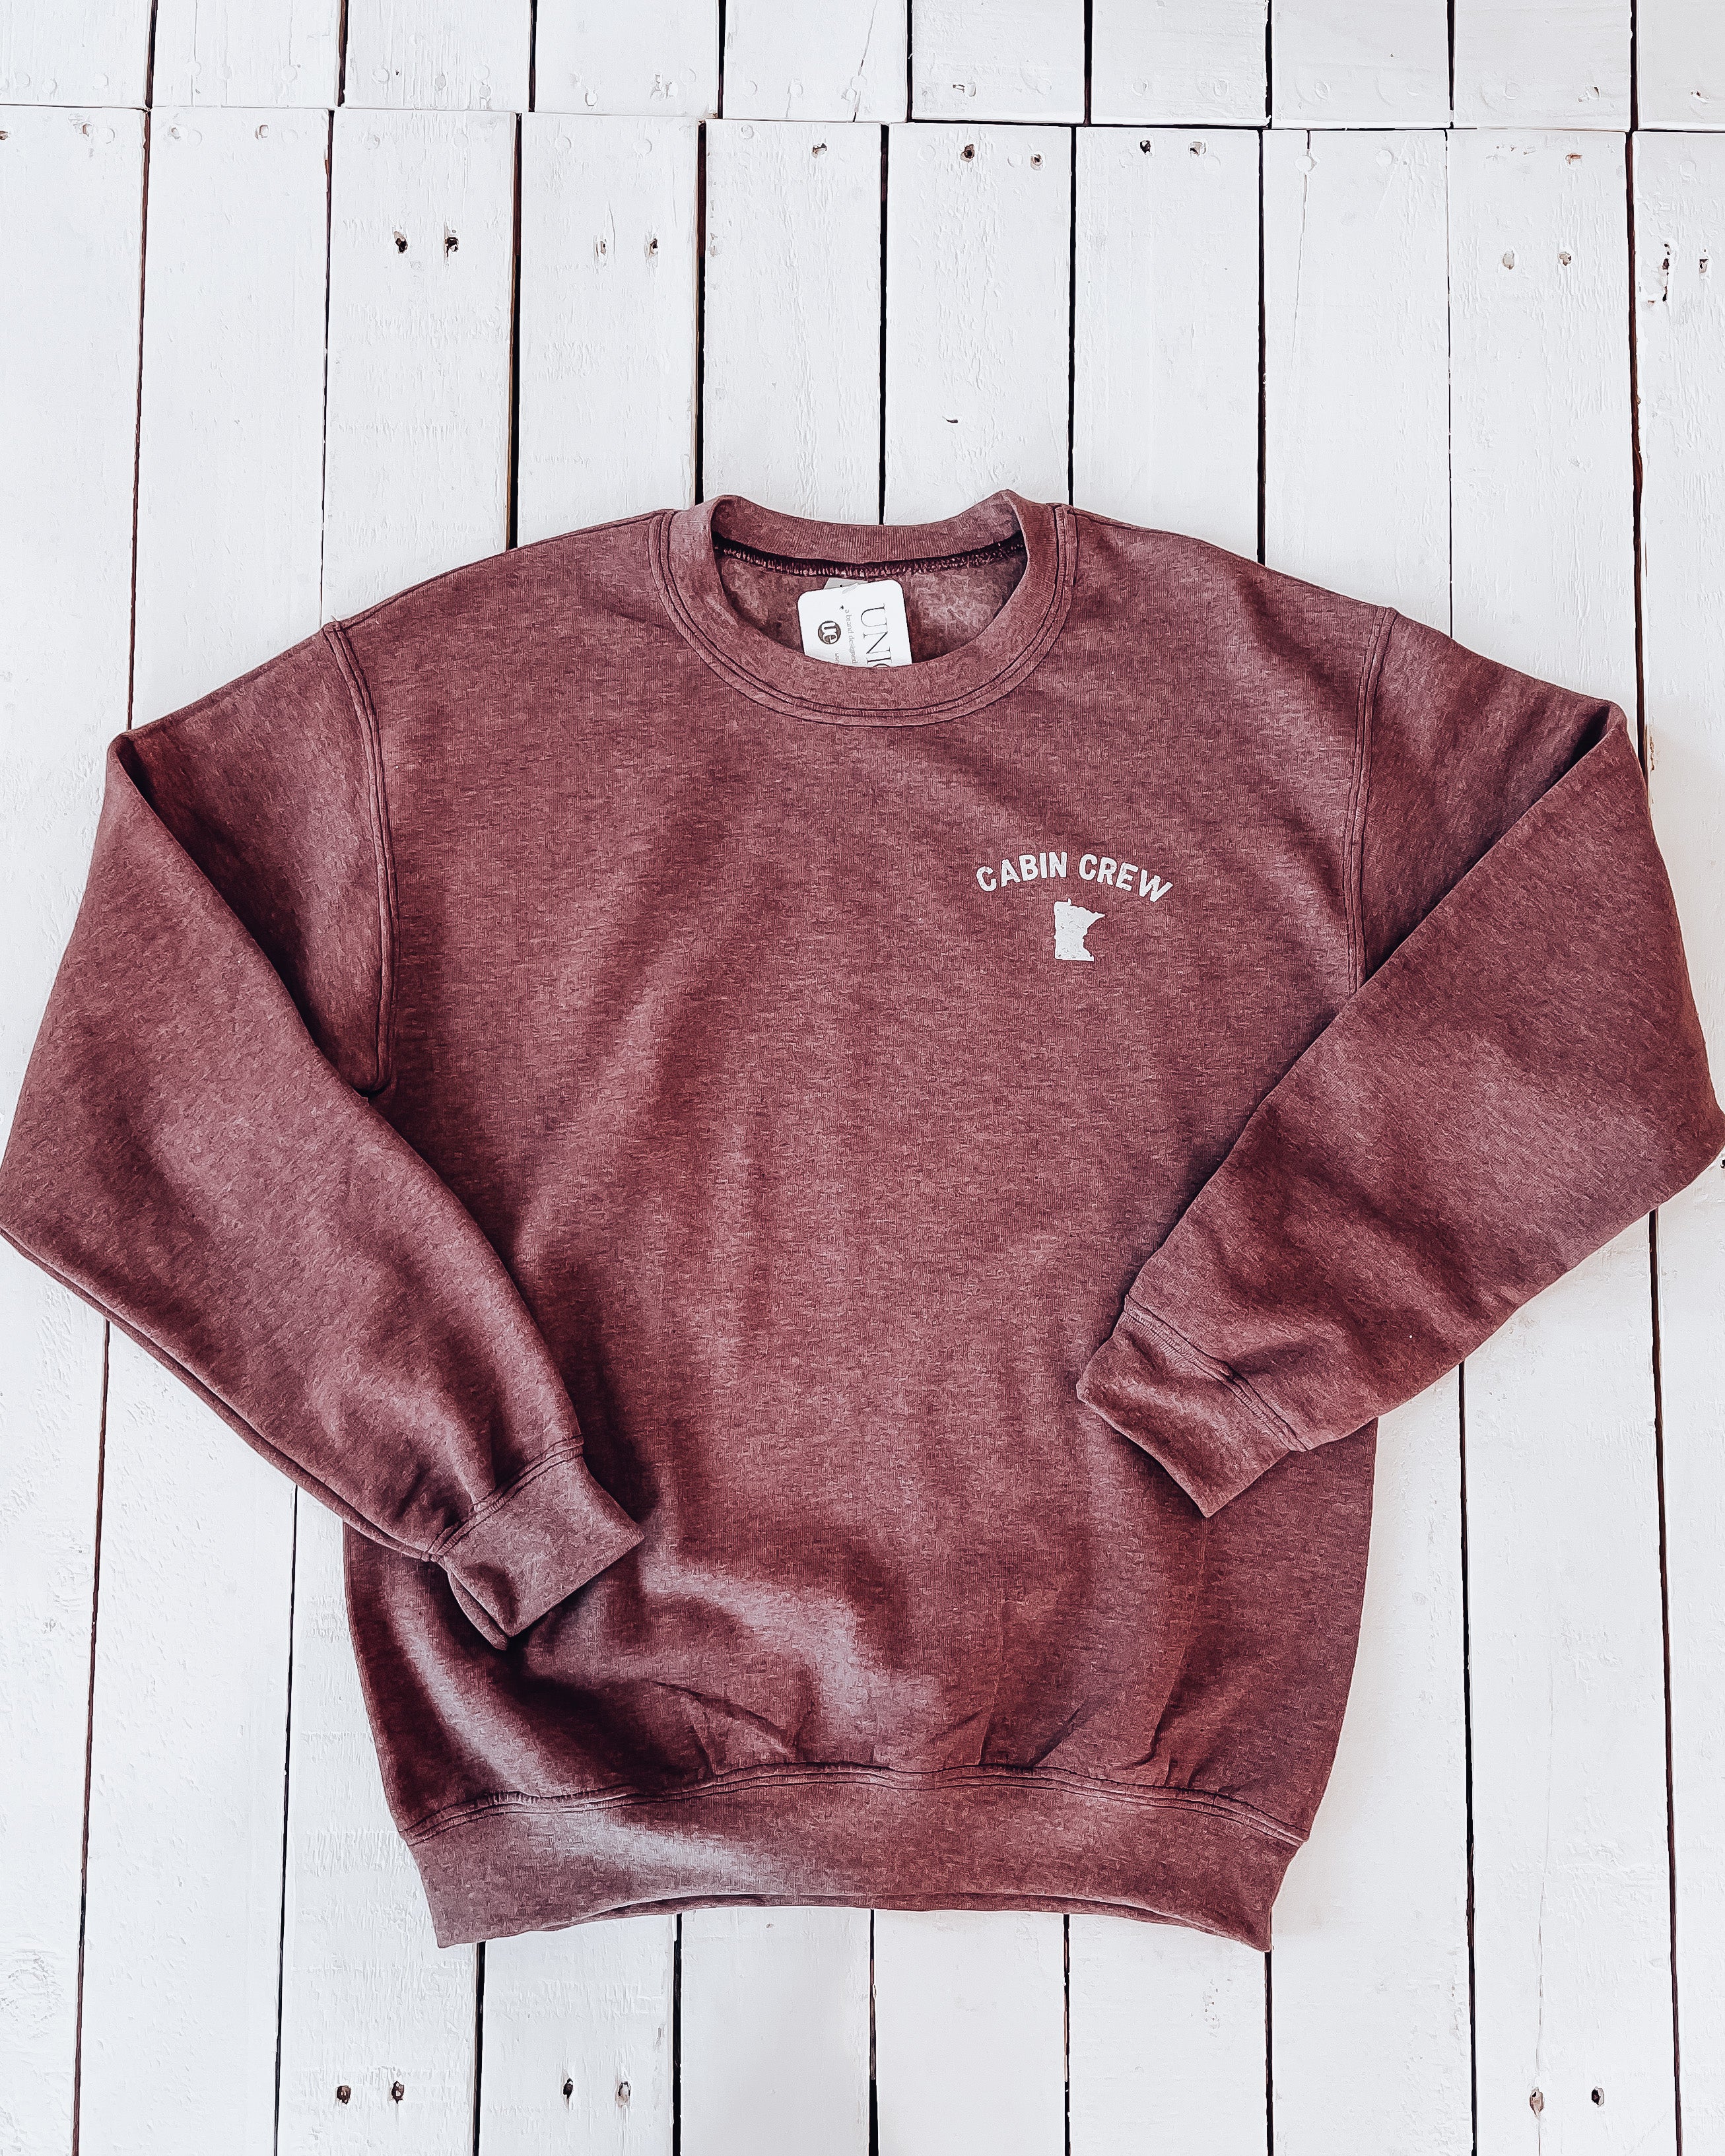 Cabin Crew unisex sweatshirt [maroon/white]